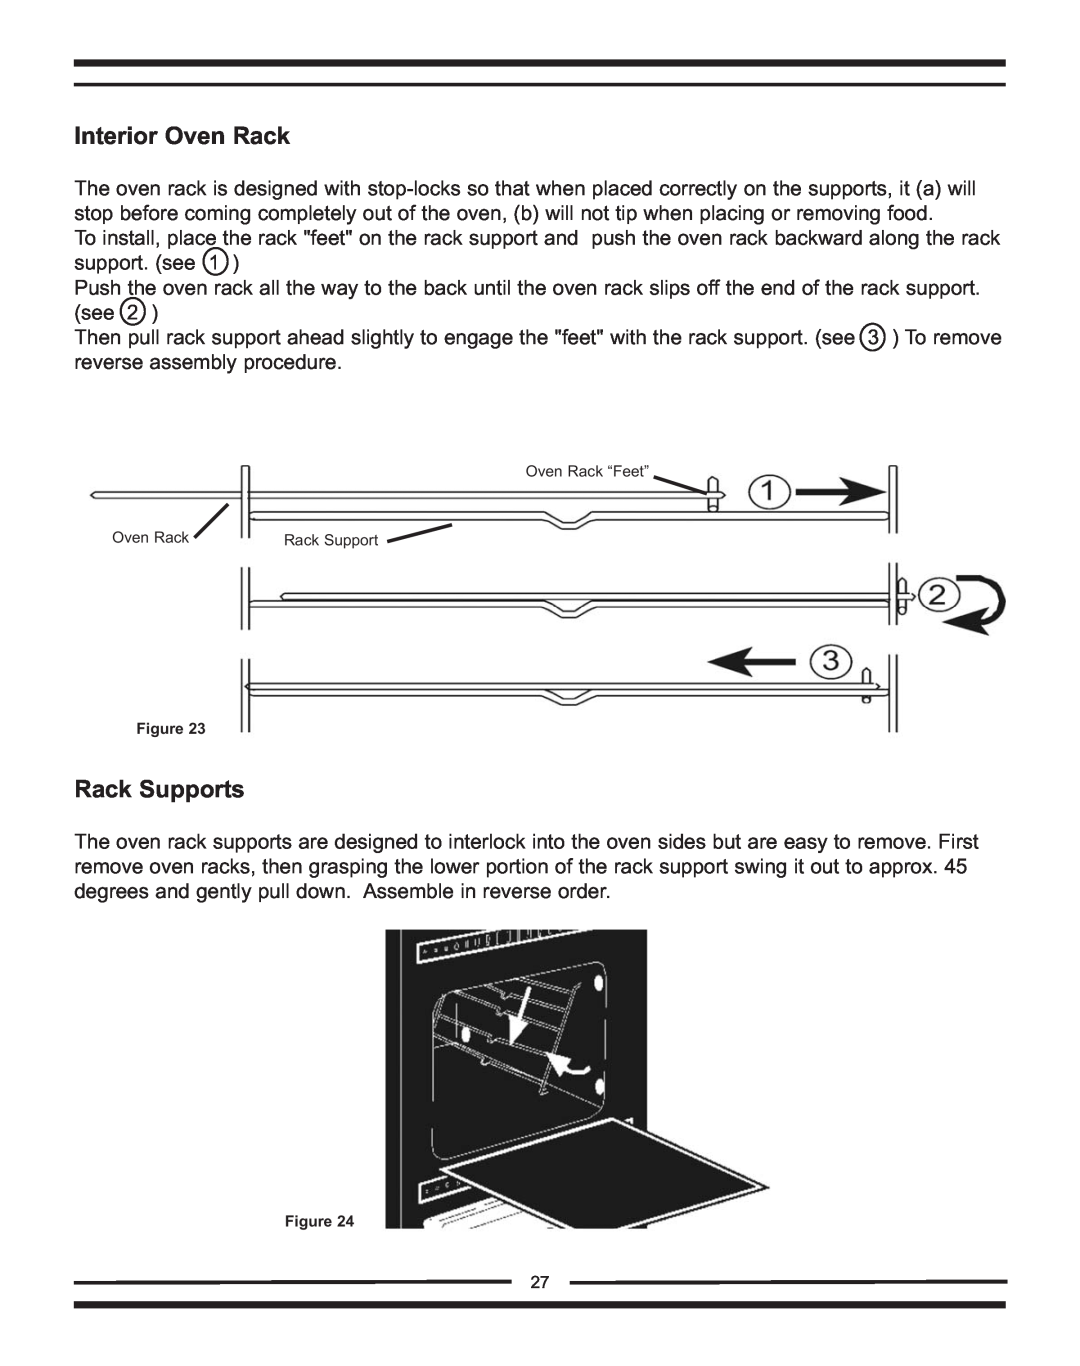 Heartland Bakeware 9200/7200 manual Interior Oven Rack, Rack Supports, Oven Rack “Feet” 